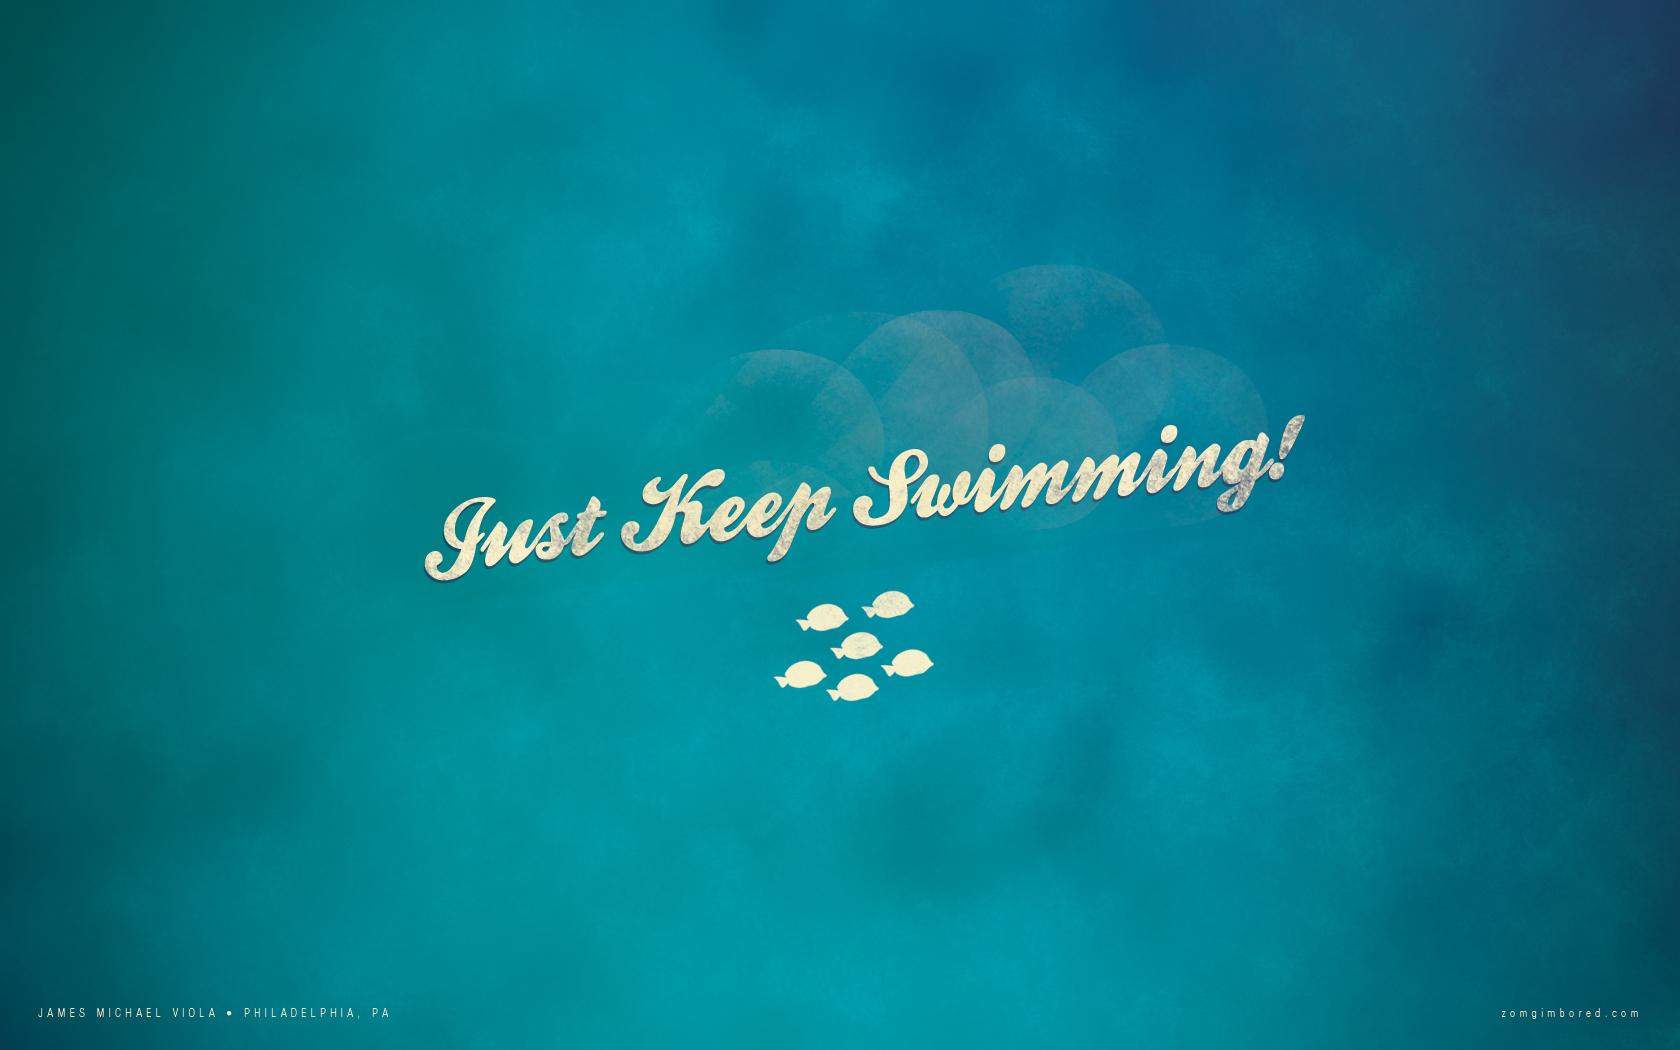 Free Desktop Wallpaper. Just Keep Swimming